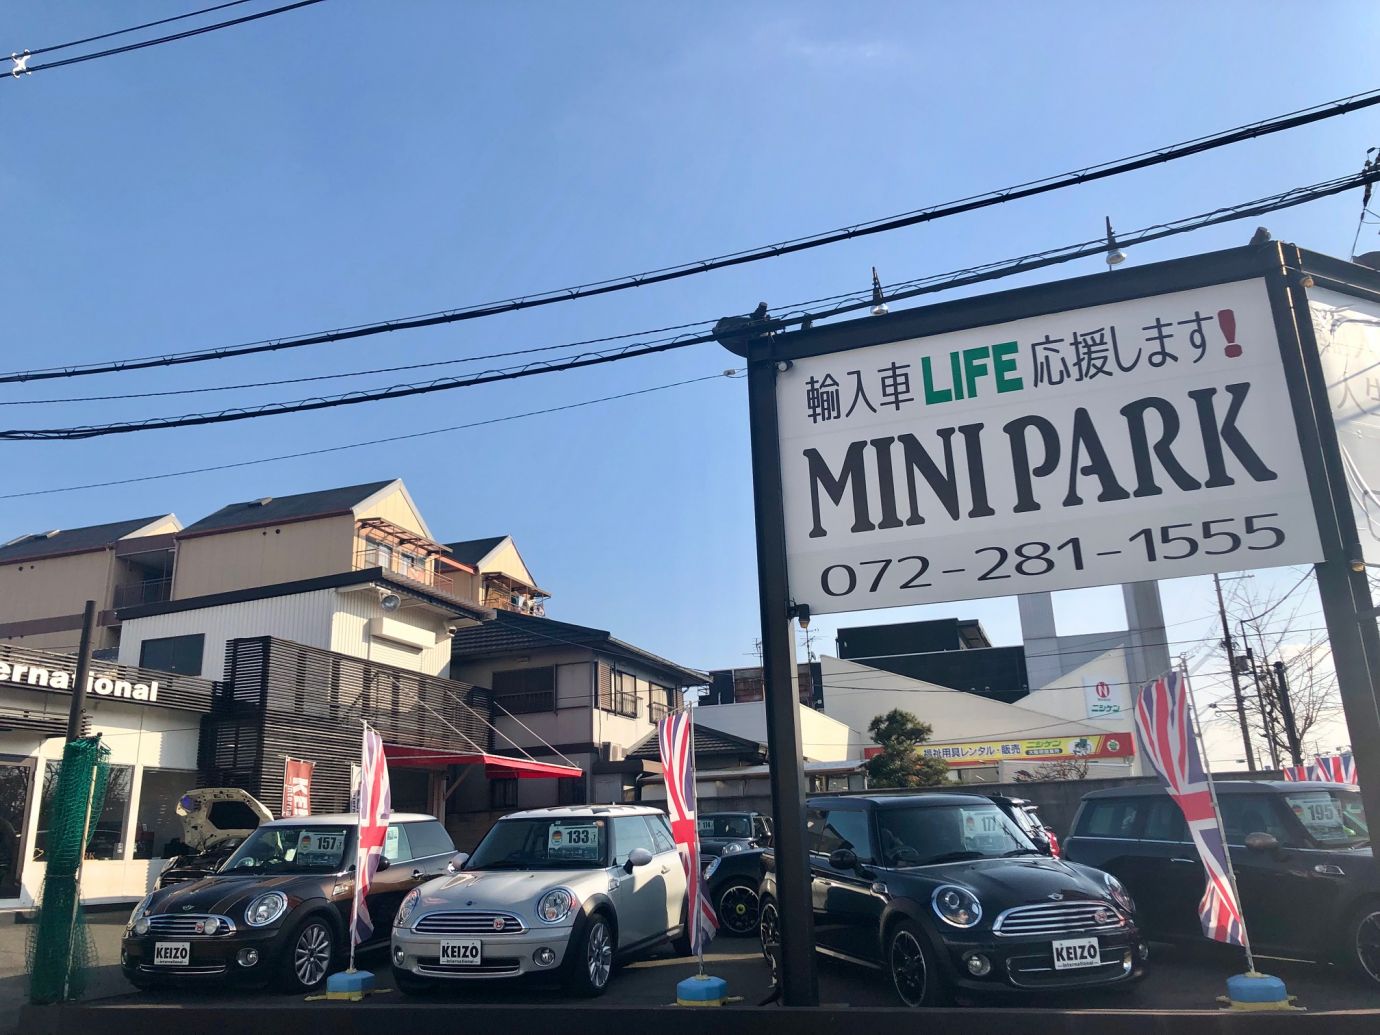 ｍｉｎｉ ミニ 生誕５０周年記念モデル特別仕様車 限定車 Mini Park ミニパーク